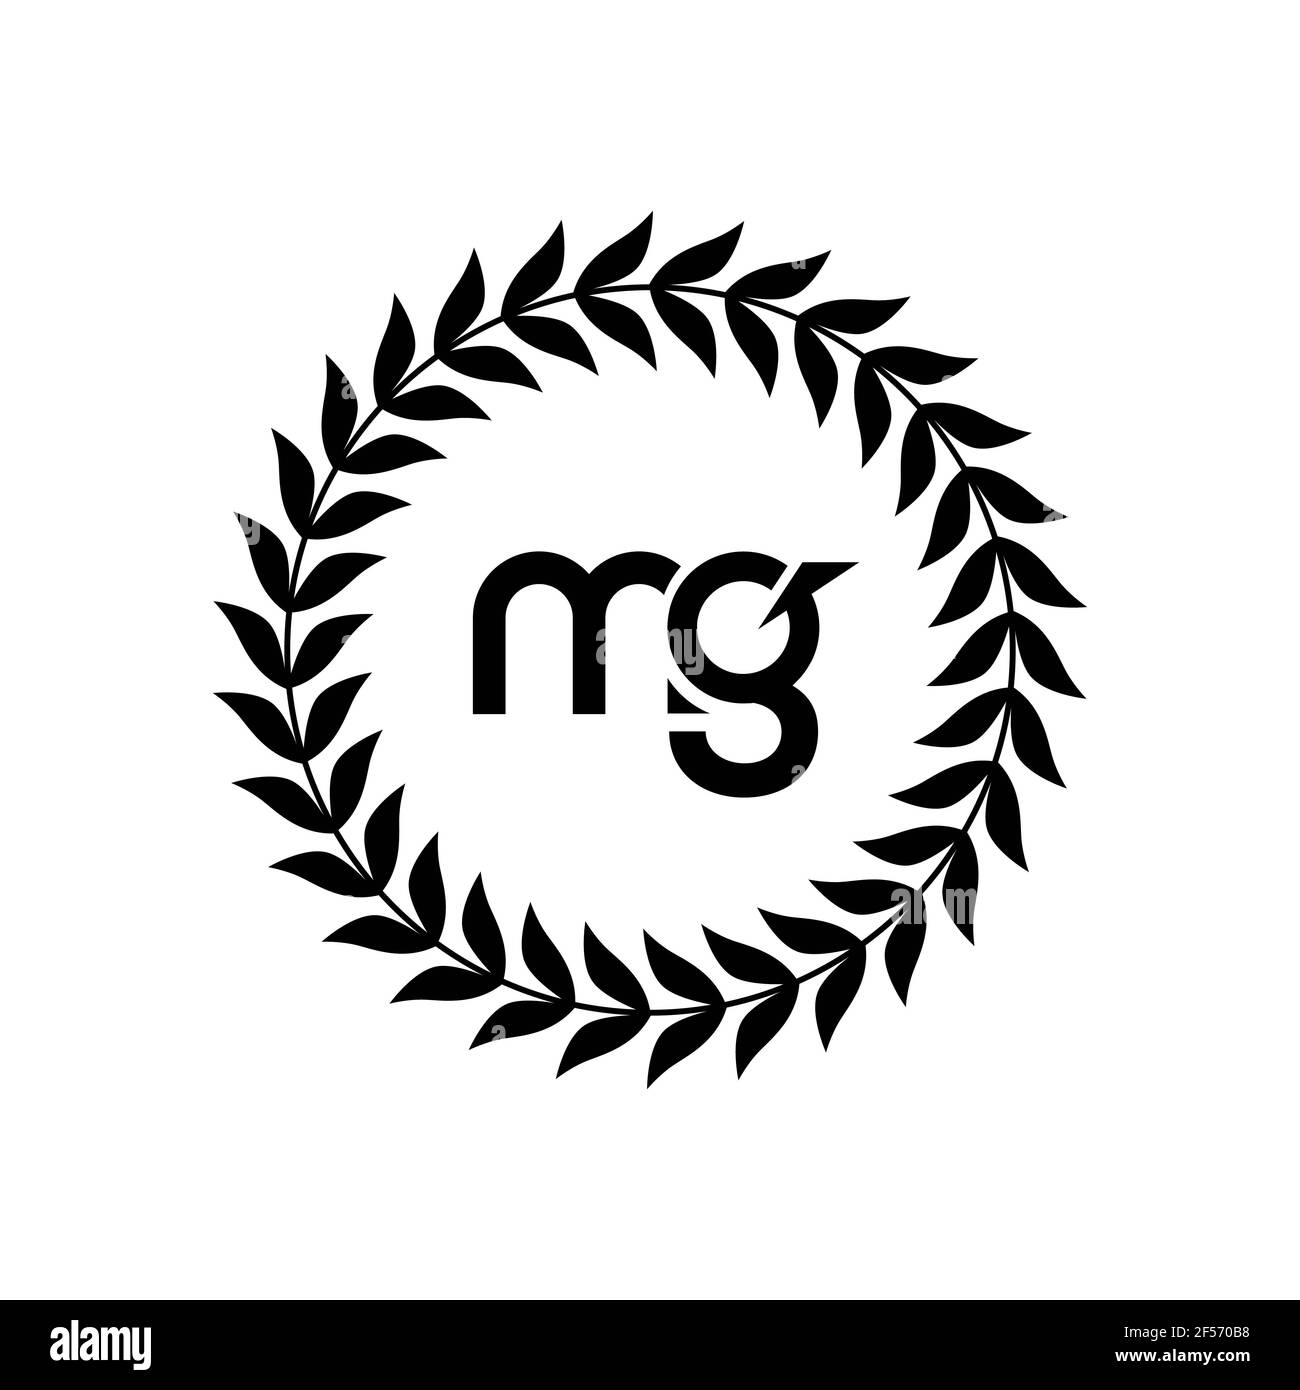 MG Logo design (2375101)